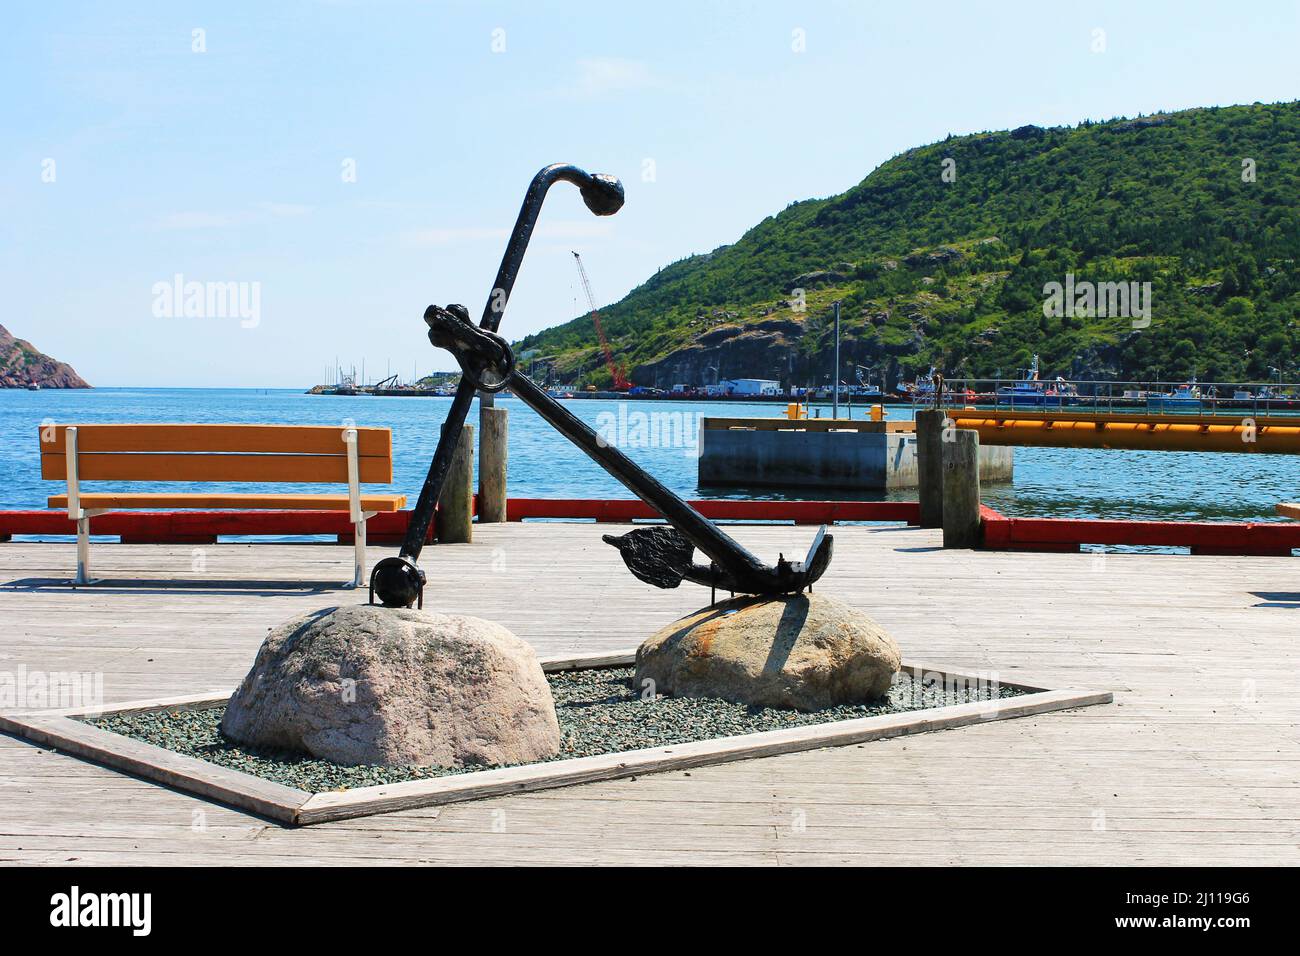 A ship anchor on diplay, Harbourside Park, St. john's, Newfoundland. Stock Photo